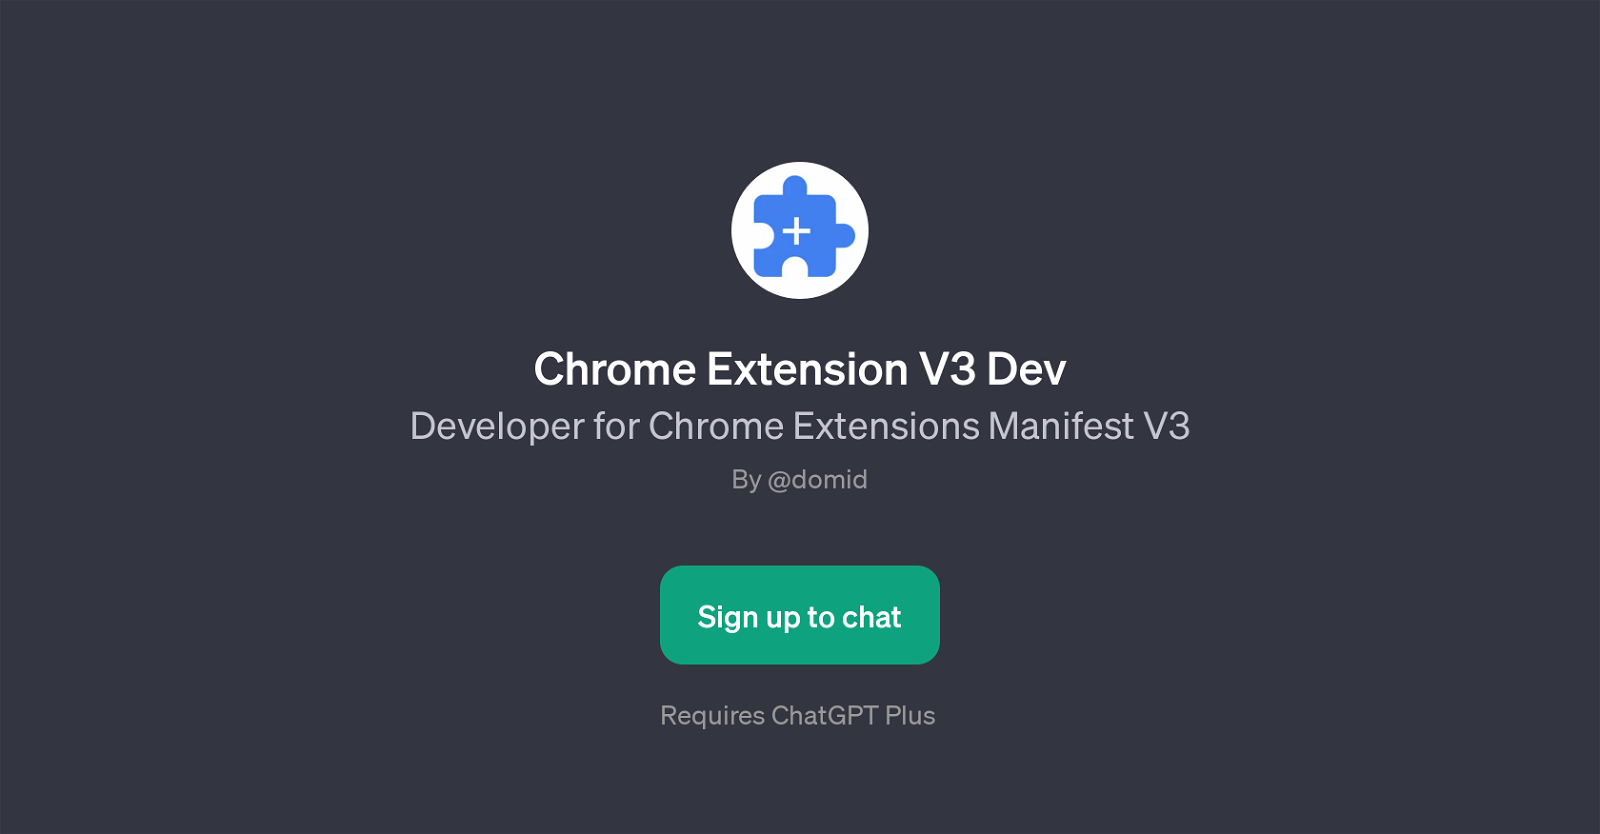 Chrome Extension V3 Dev website